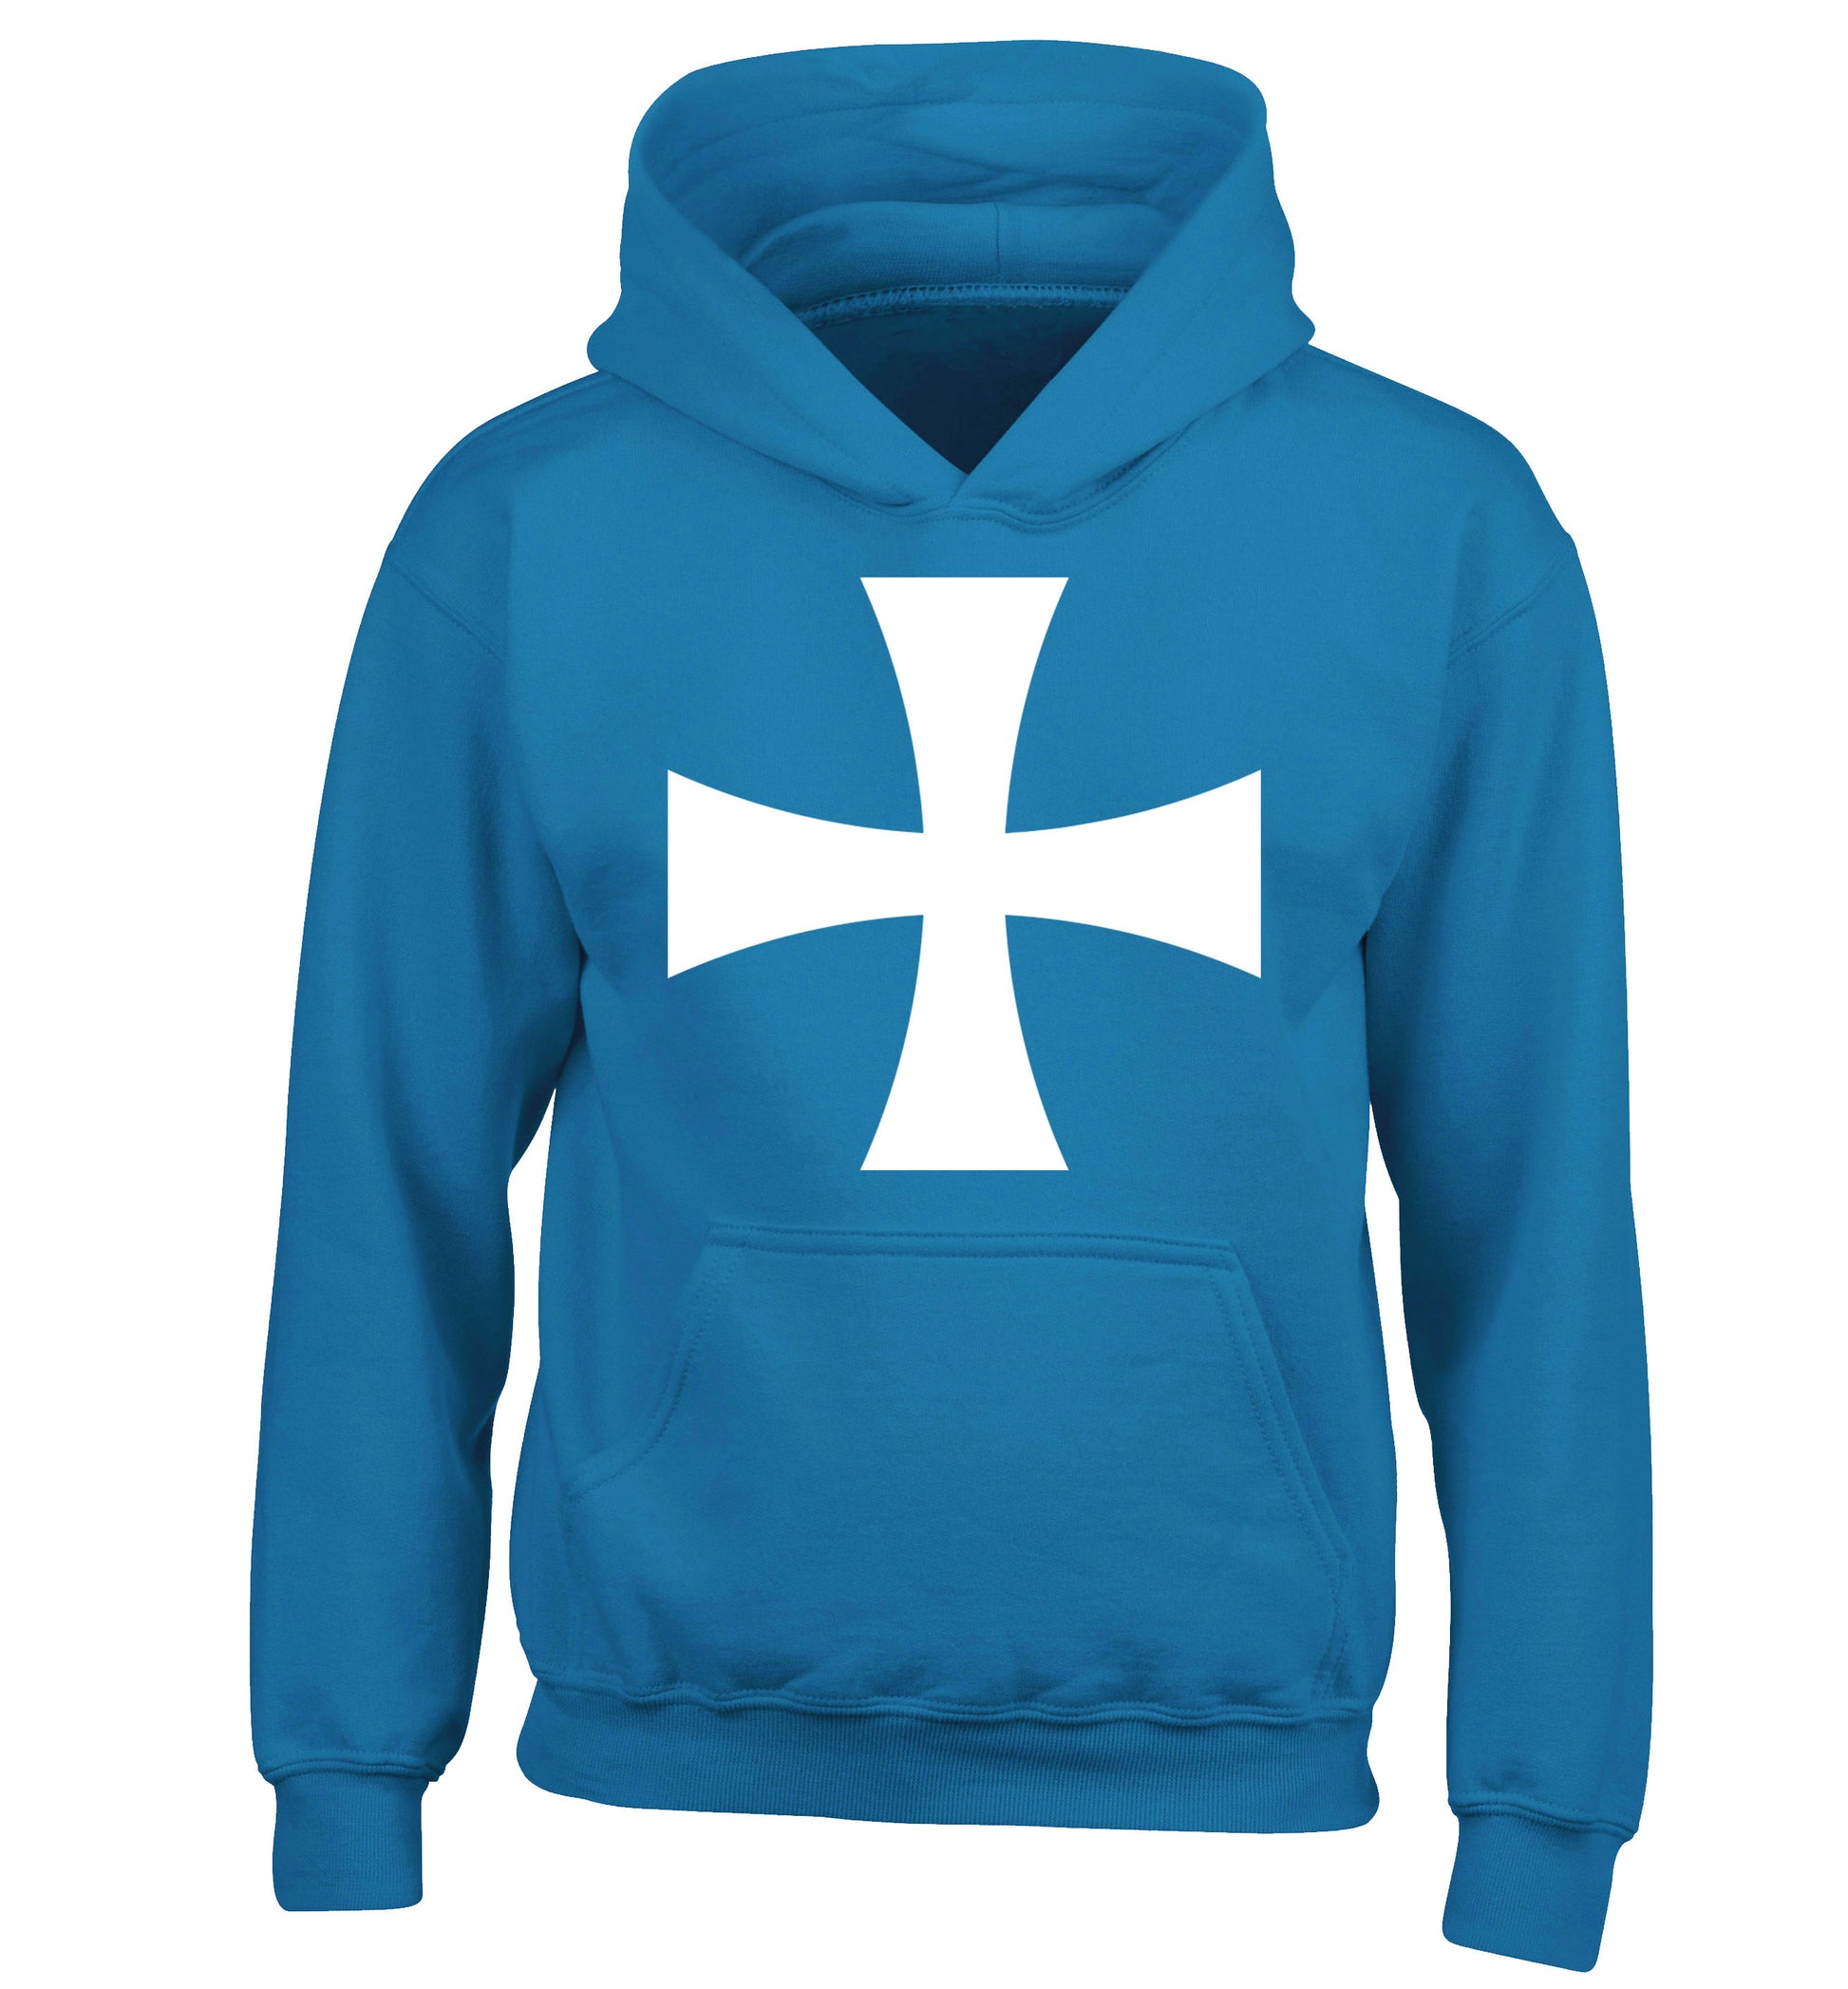 Knights Templar cross children's blue hoodie 12-14 Years